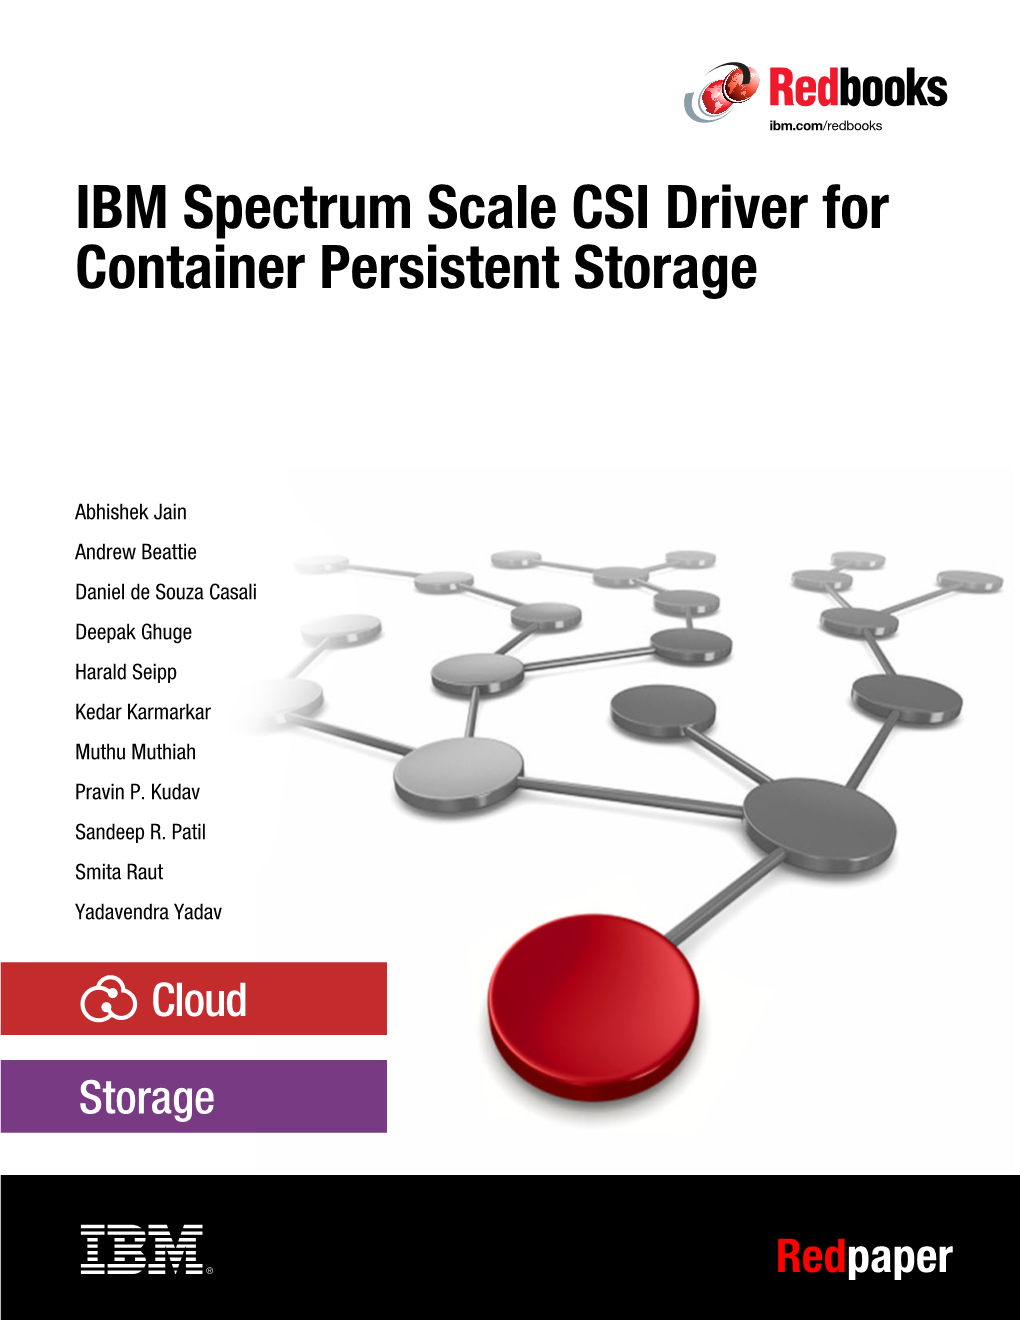 IBM Spectrum Scale CSI Driver for Container Persistent Storage